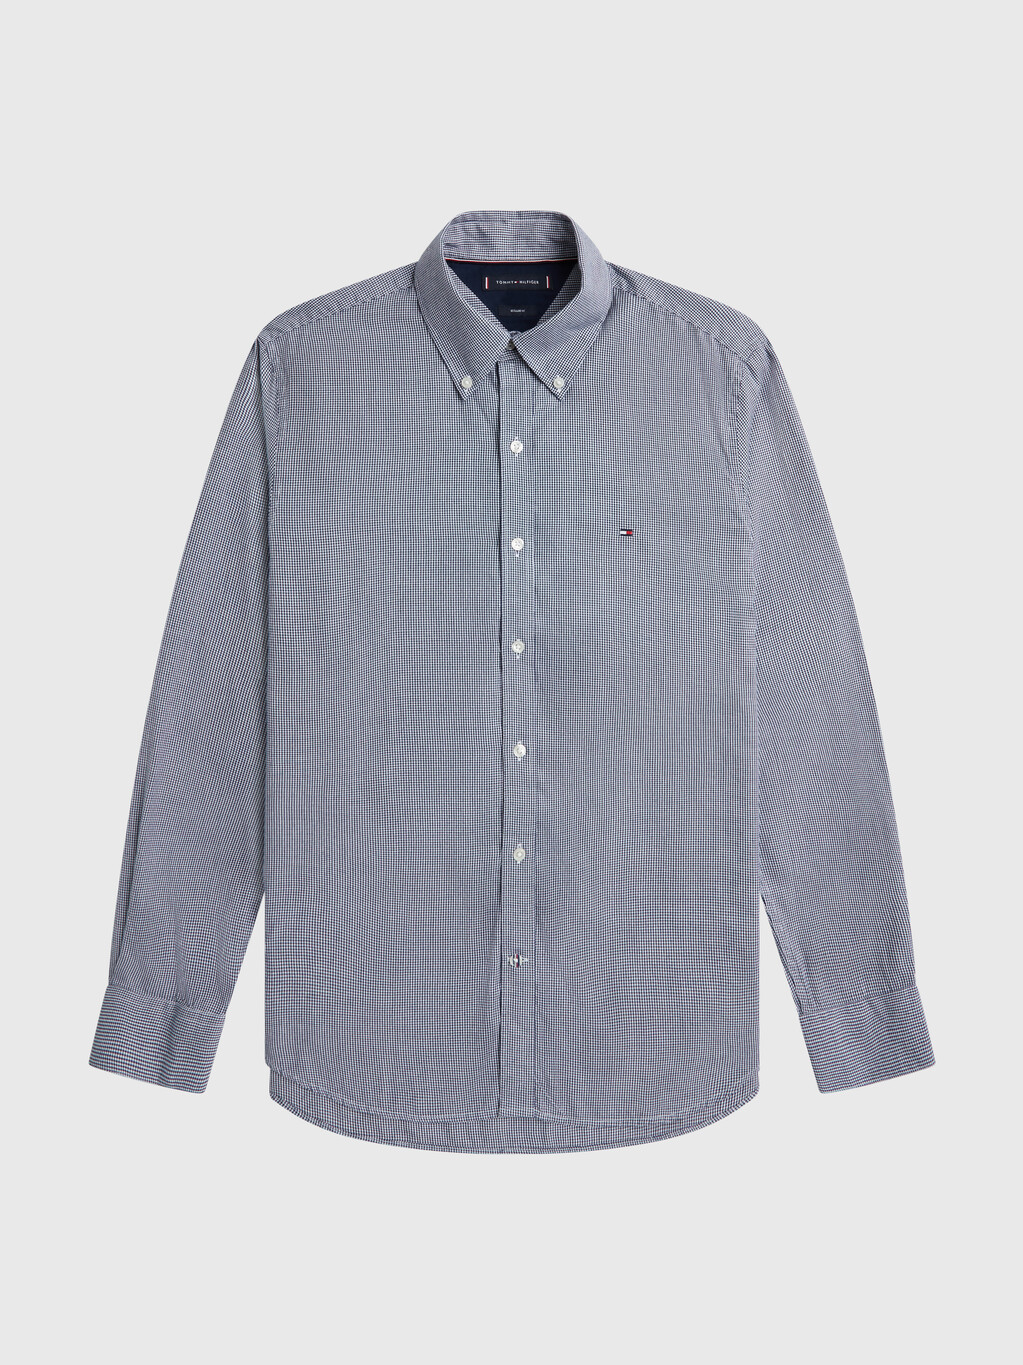 Micro Check Regular Fit Shirt, Carbon Navy / Optic White, hi-res